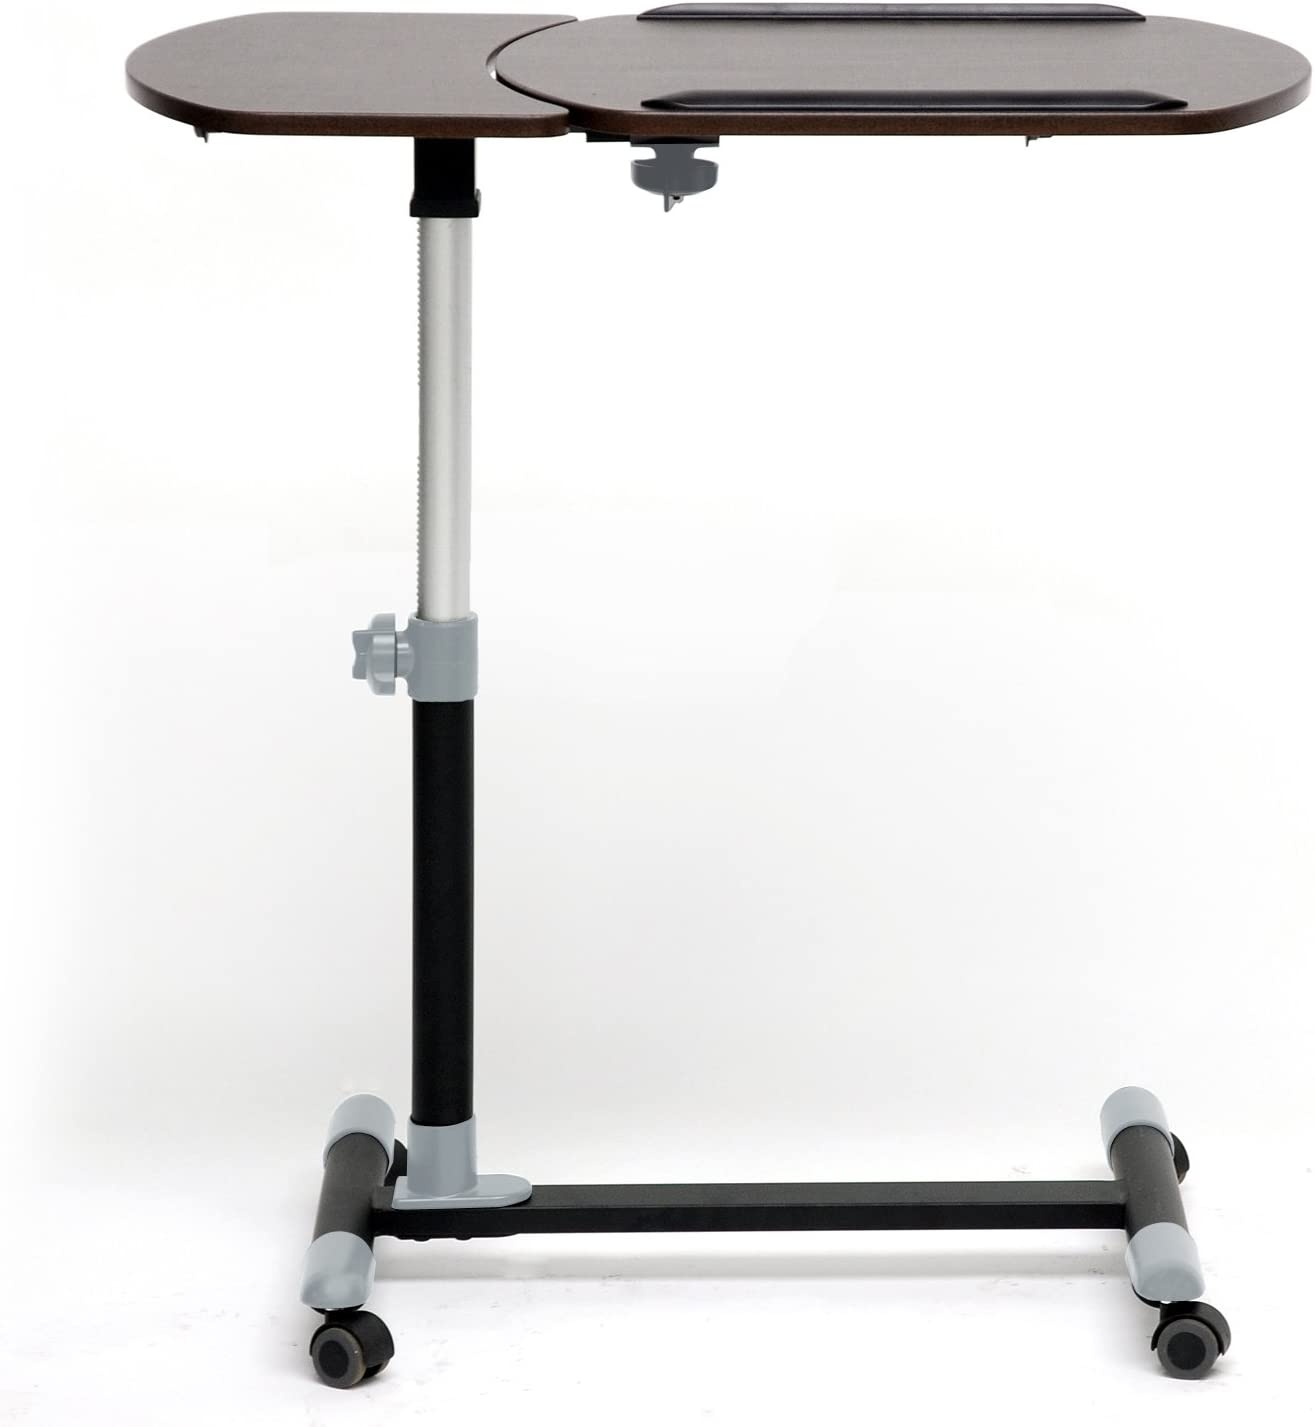 Baxton Studio Wheeled Laptop Tray Table with Tilt Control, Olsen Brown